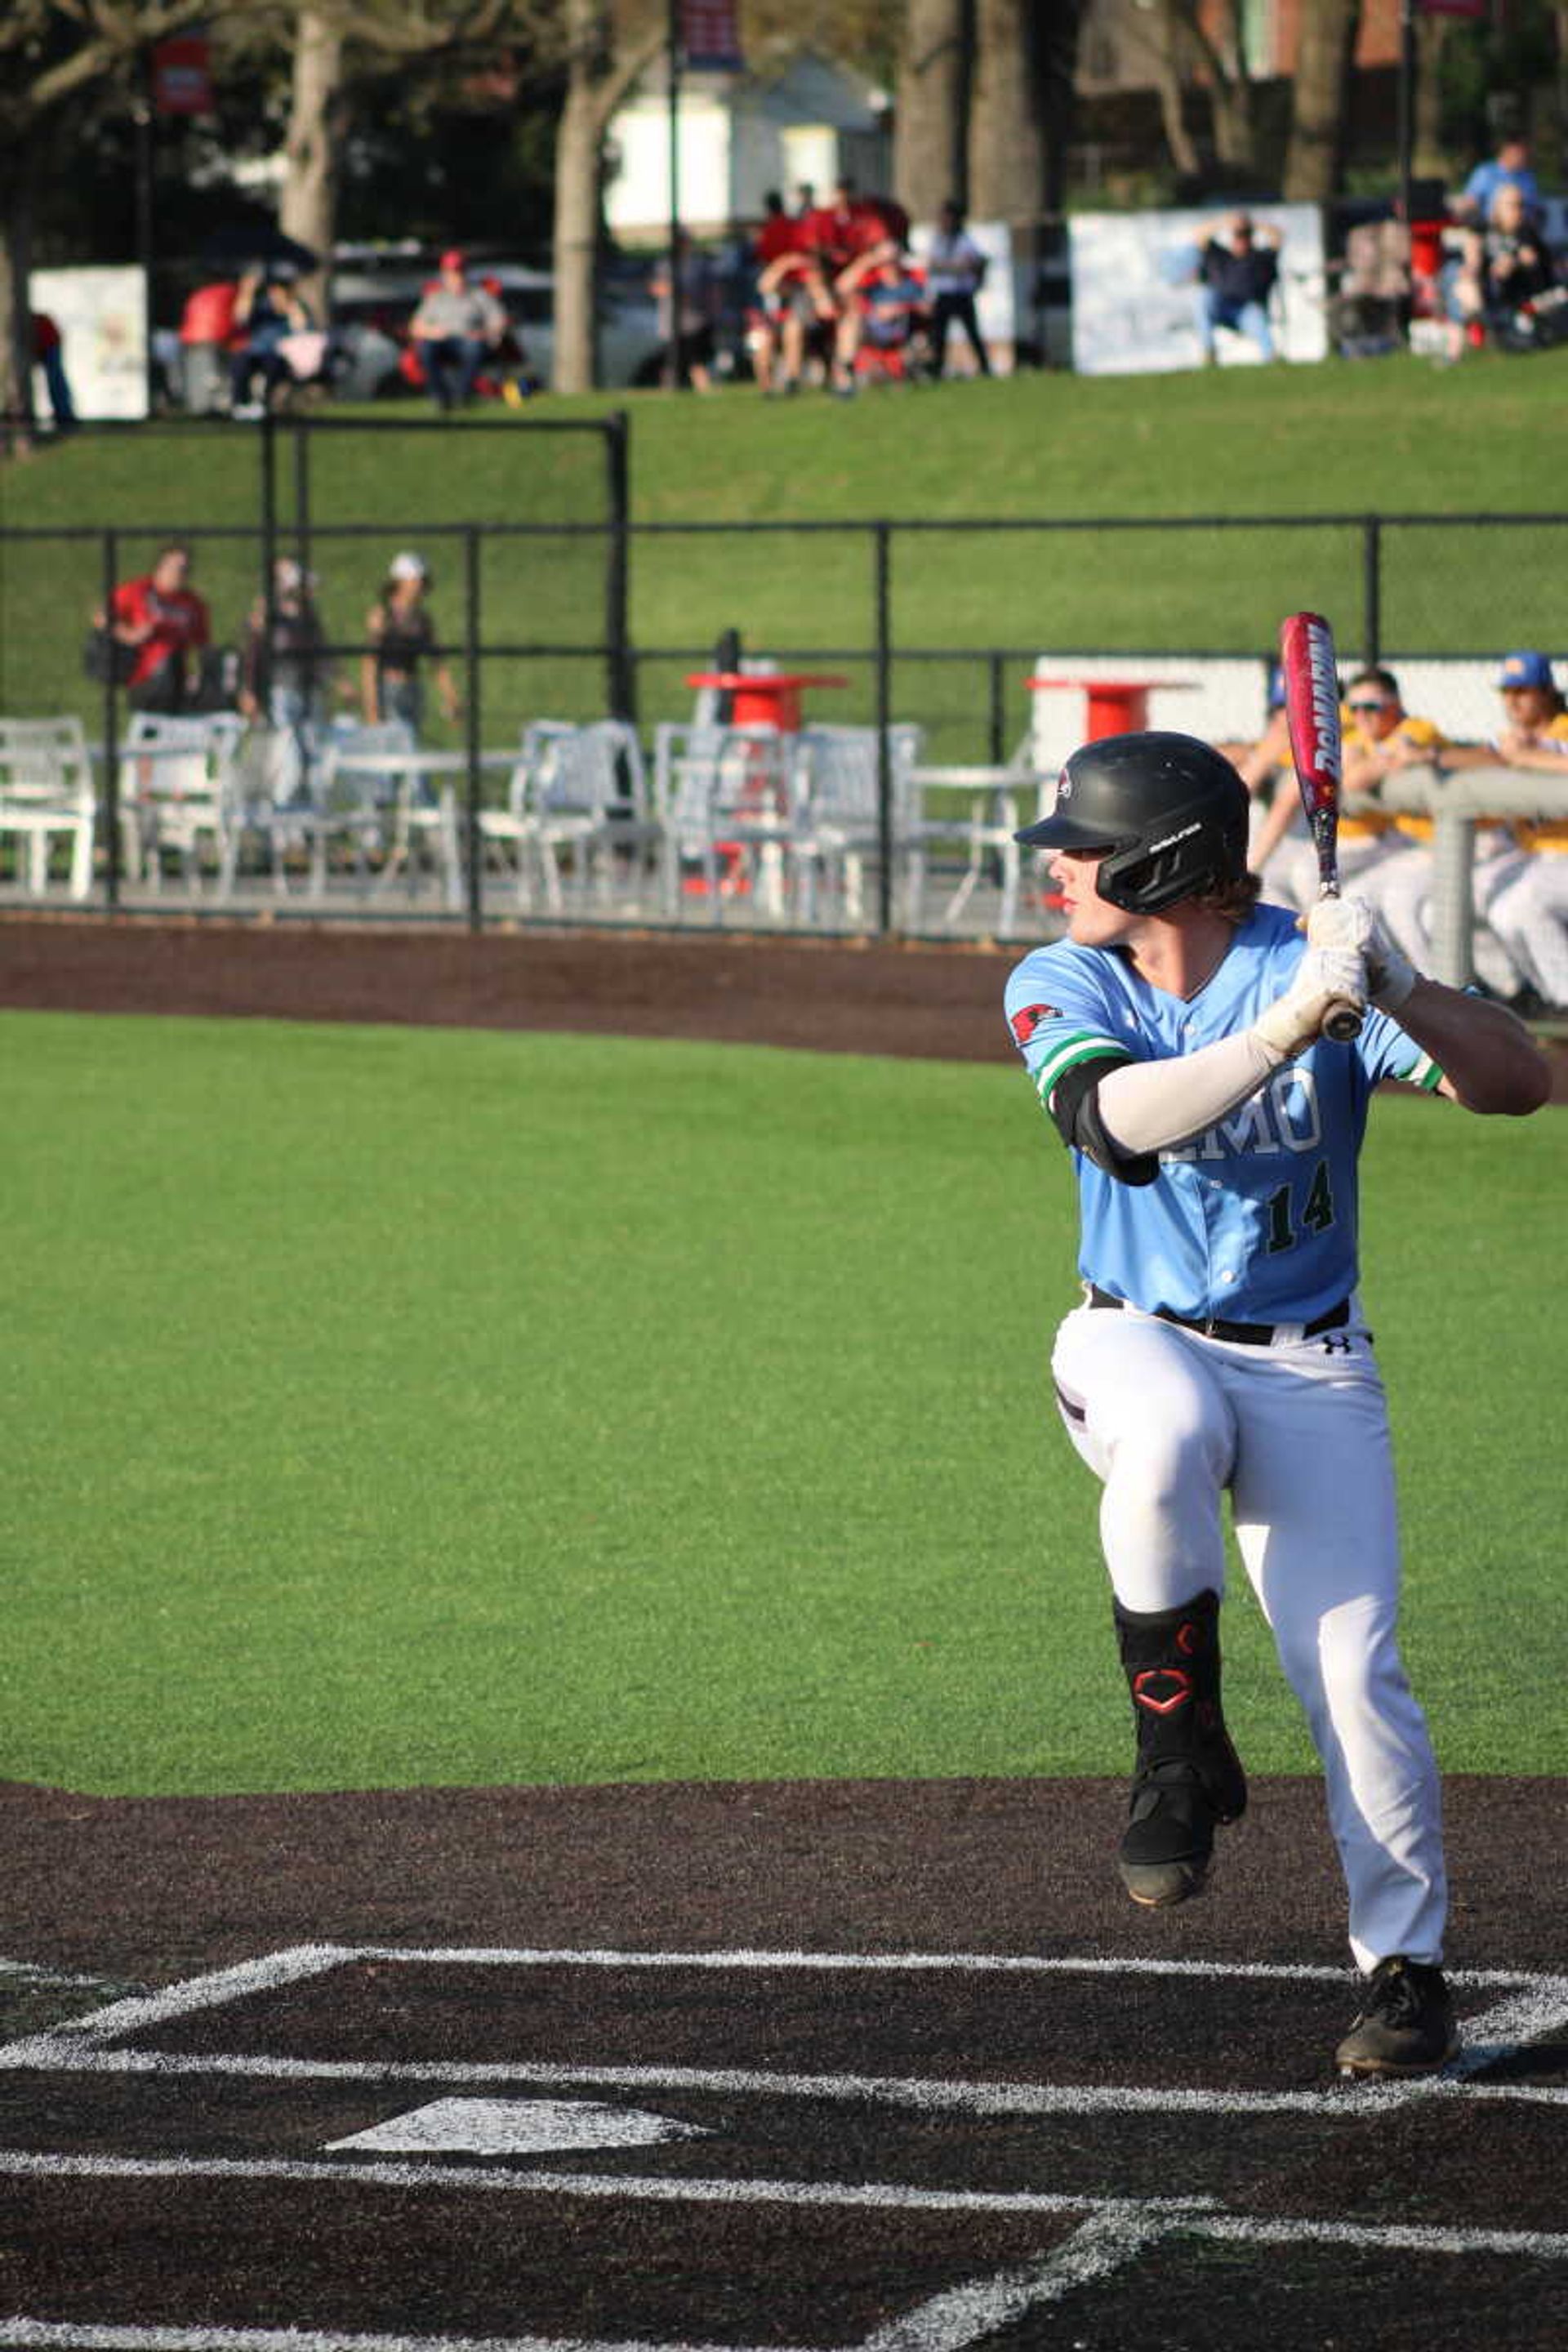 Sophomore third baseman Peyton Leeper readies his swing during the Morehead State matchup on April 23.